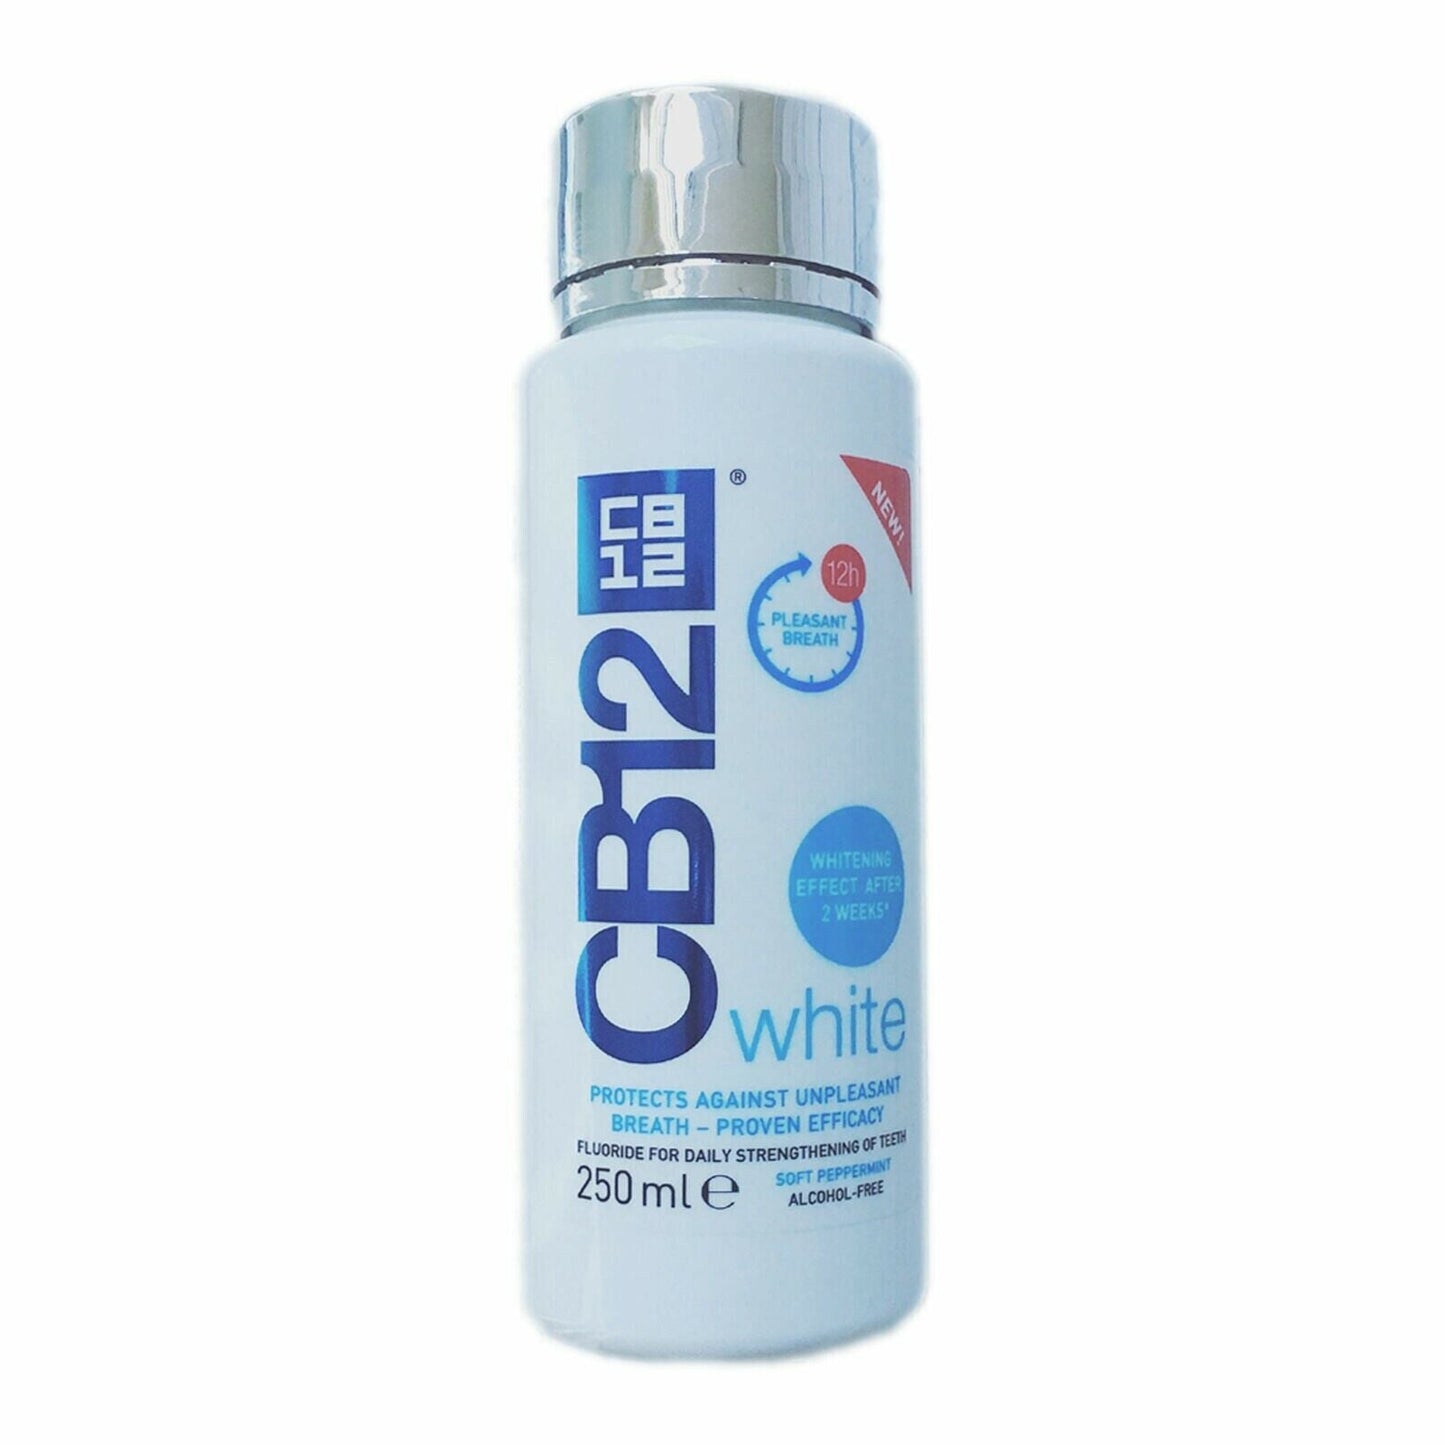 CB12 White Bad Breath Mouthwash Treatment - 250ml